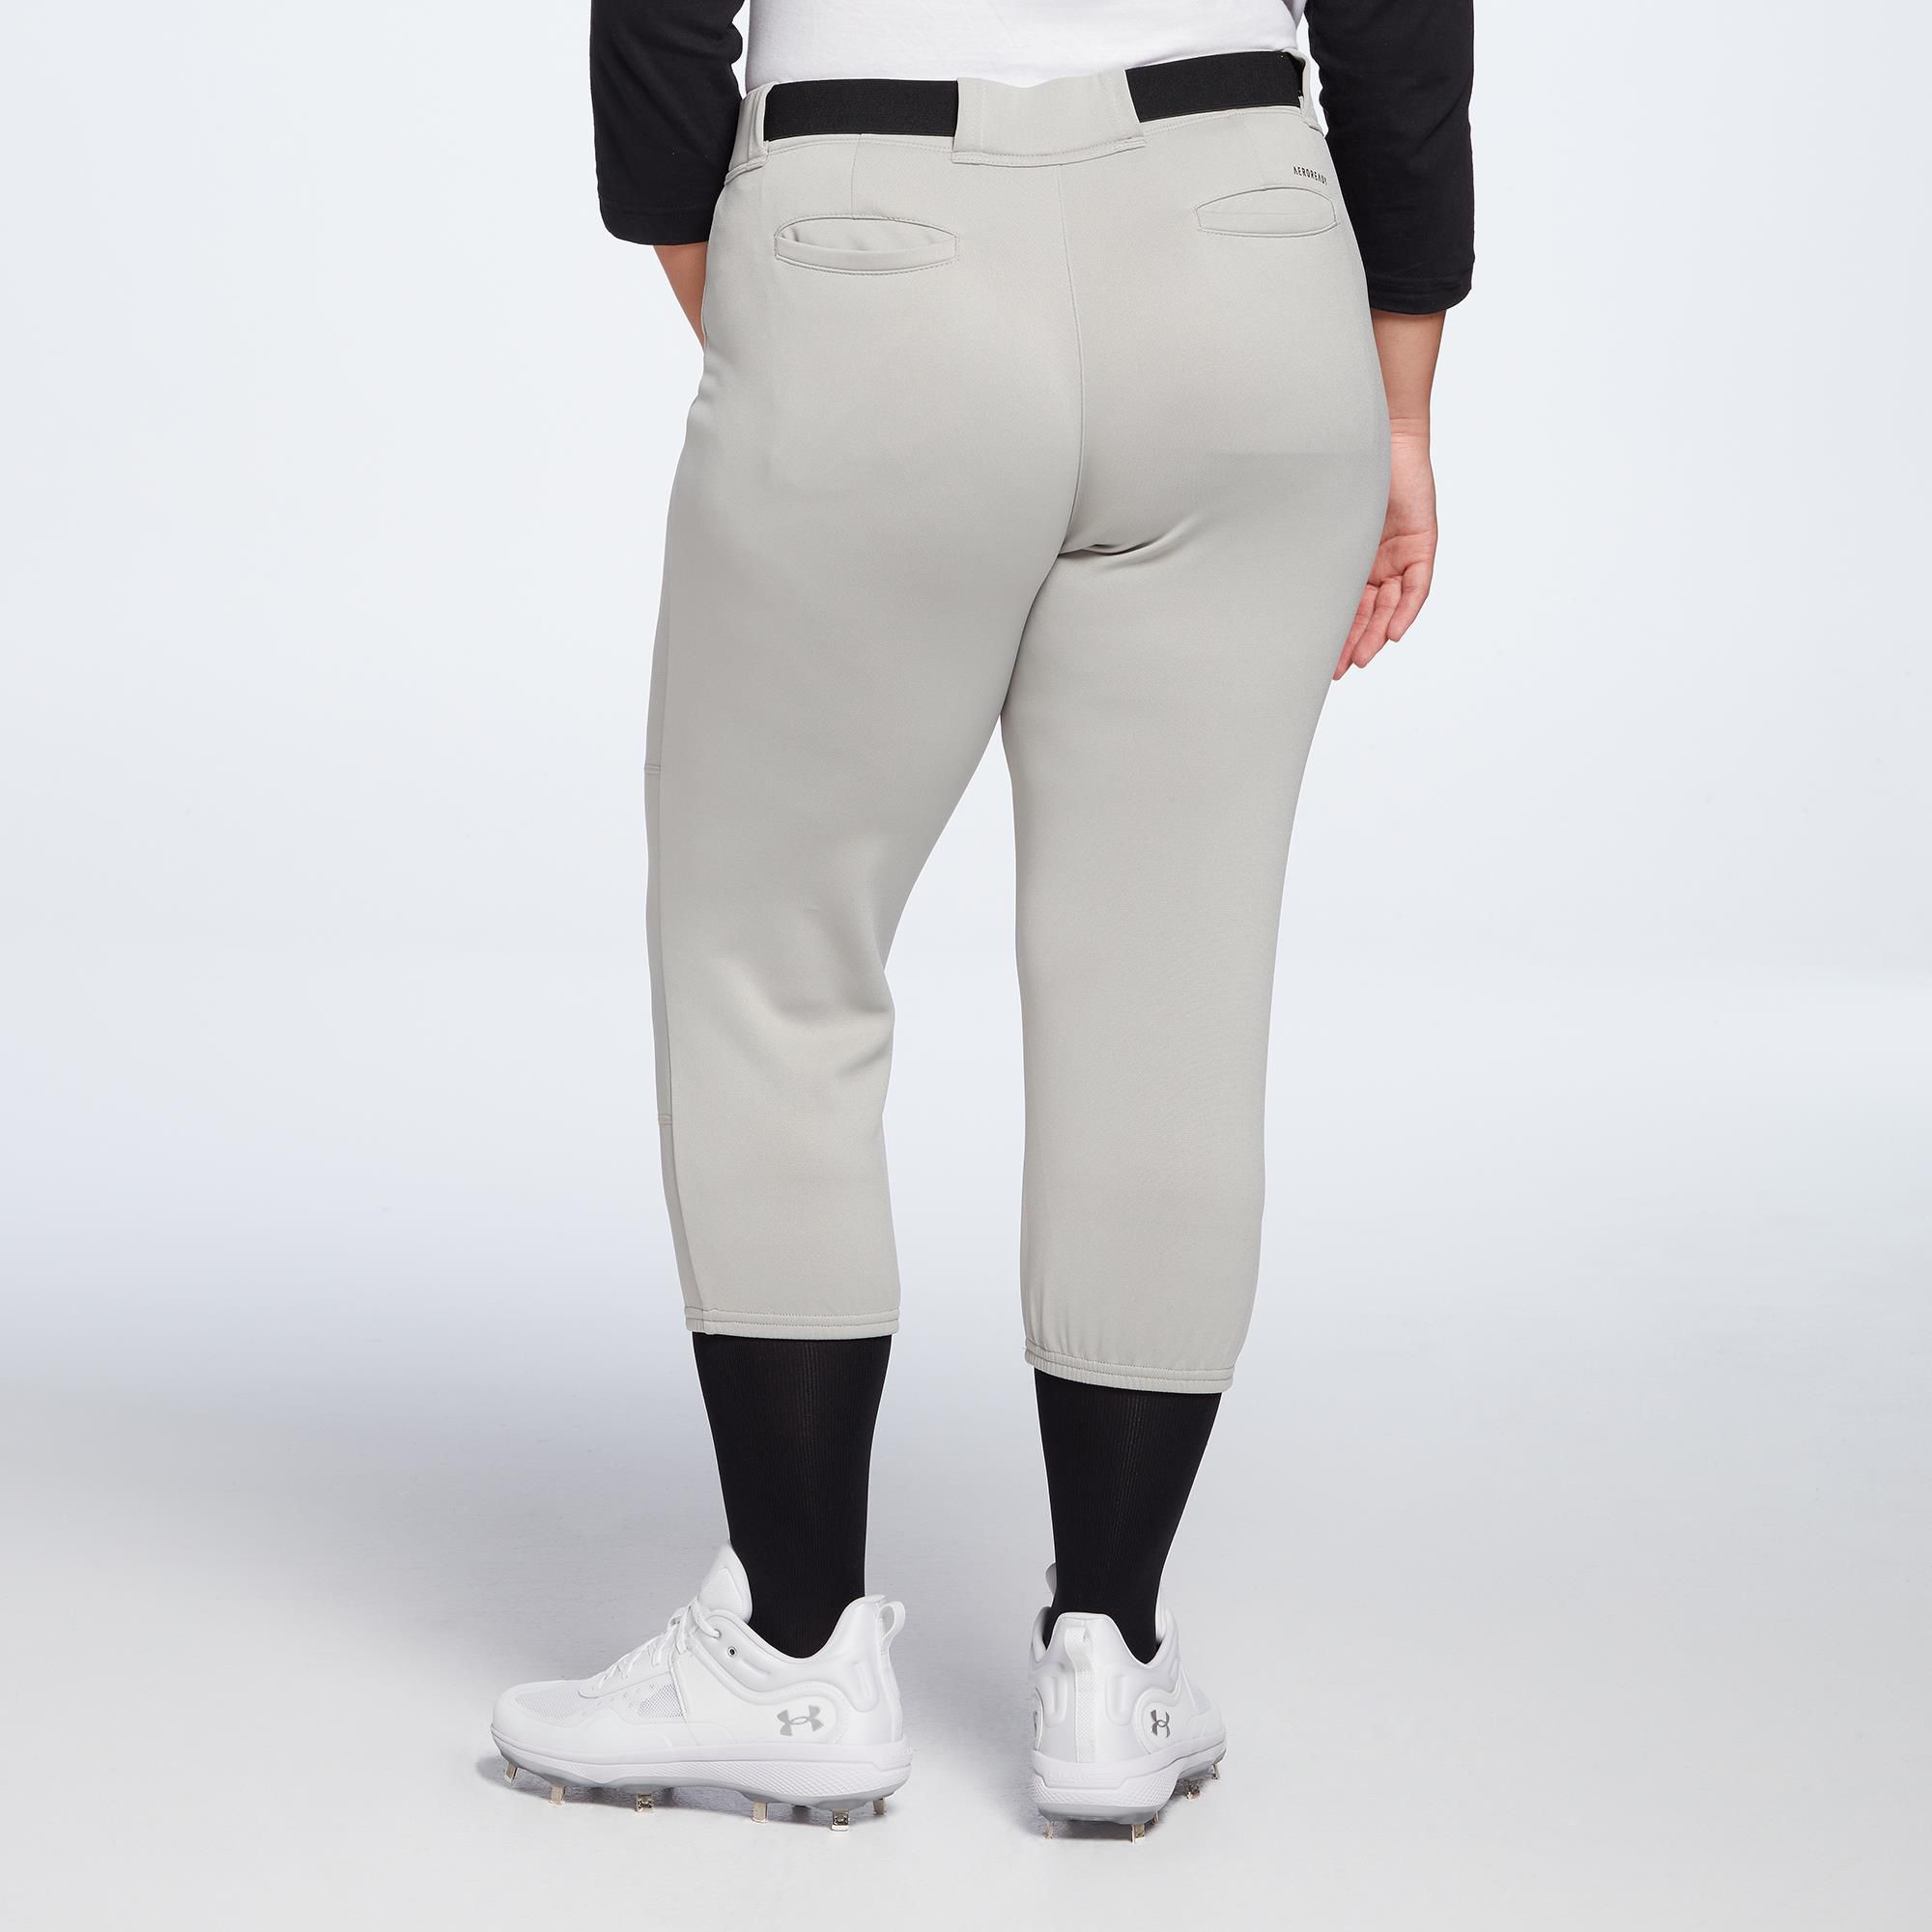 adidas climalite softball pants women's